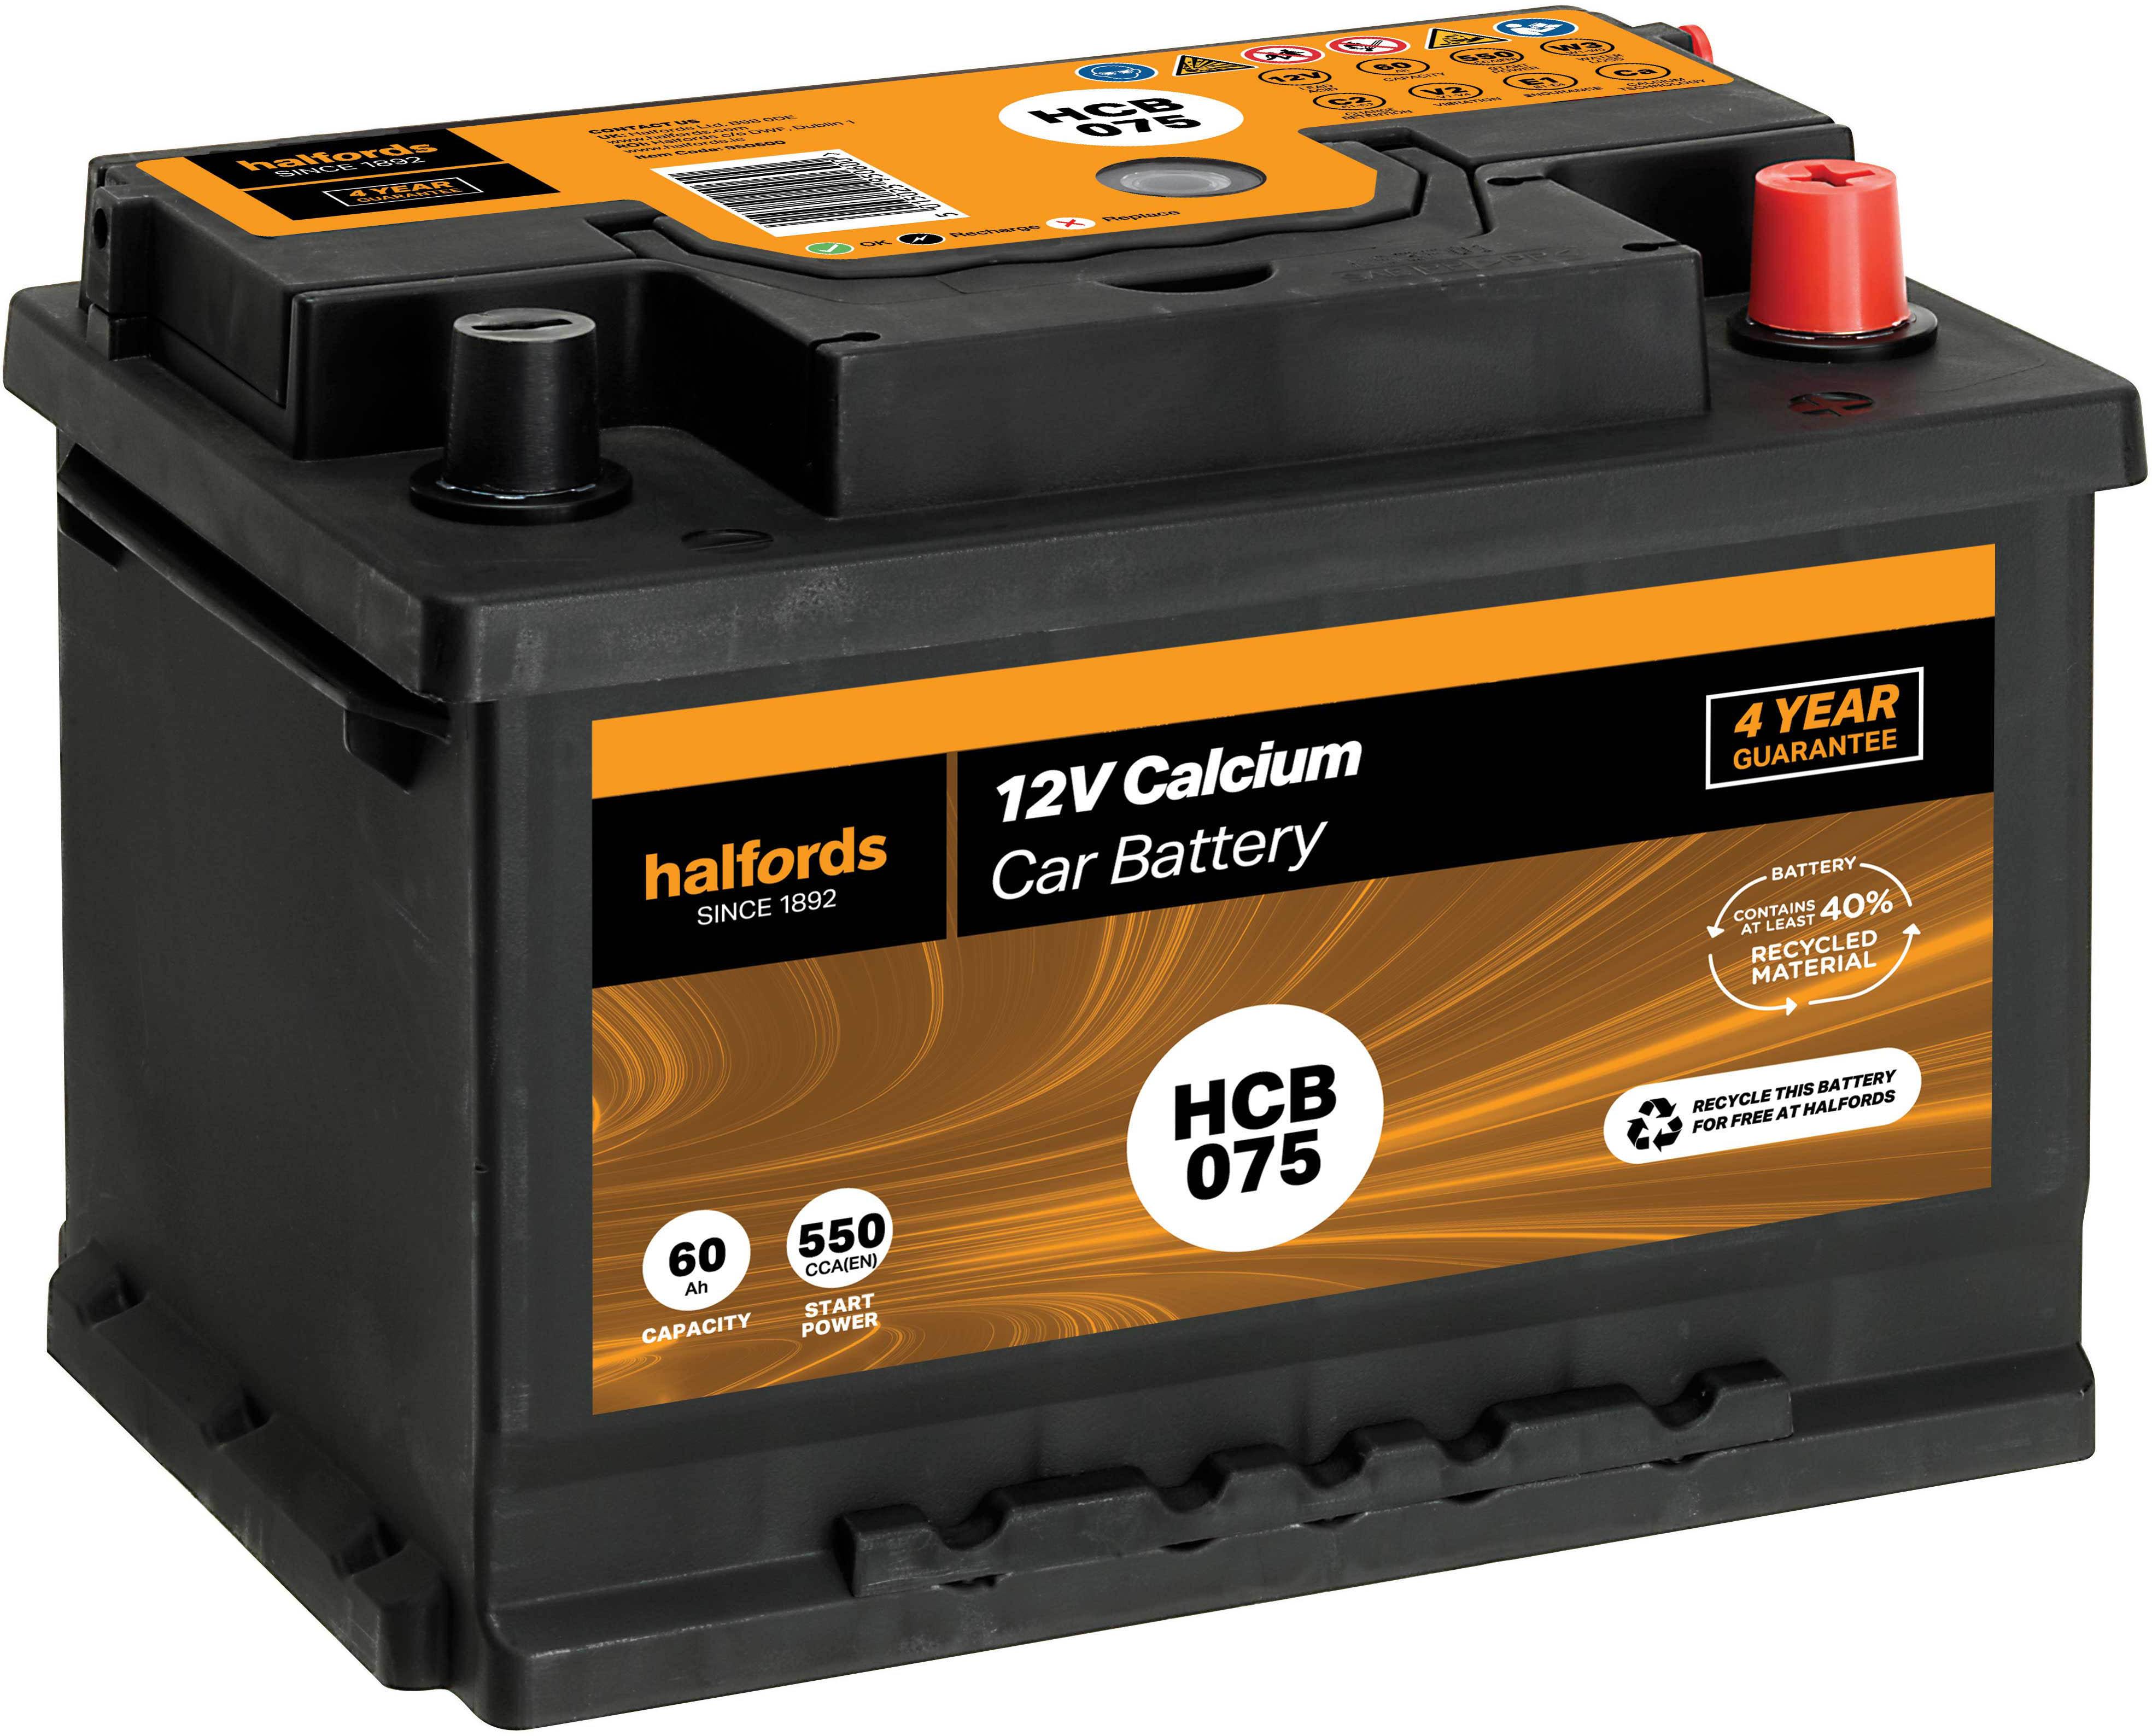 Halfords Hcb075 Calcium 12V Car Battery 4 Year Guarantee